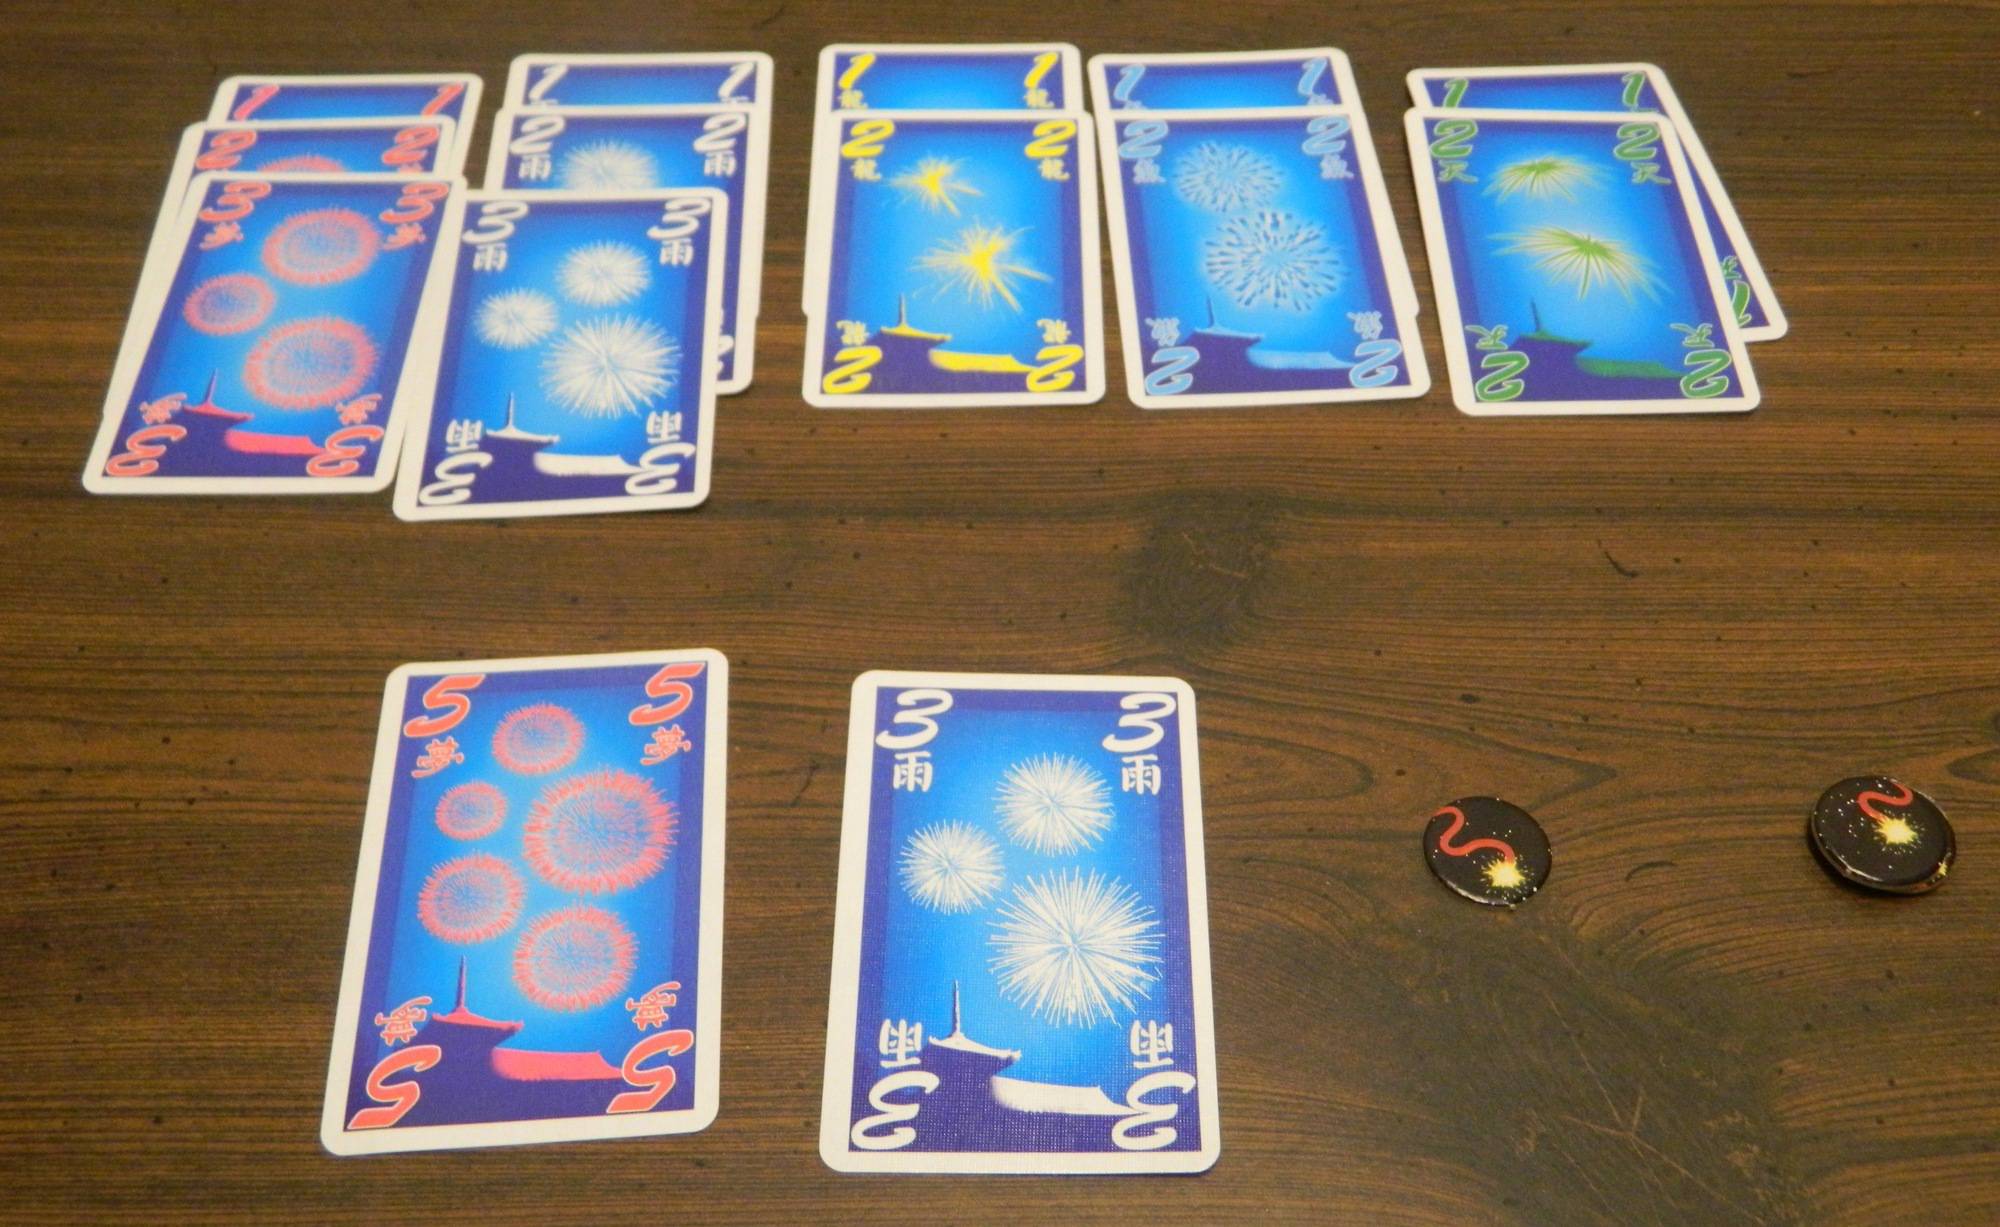 Hanabi (card game) - Wikipedia